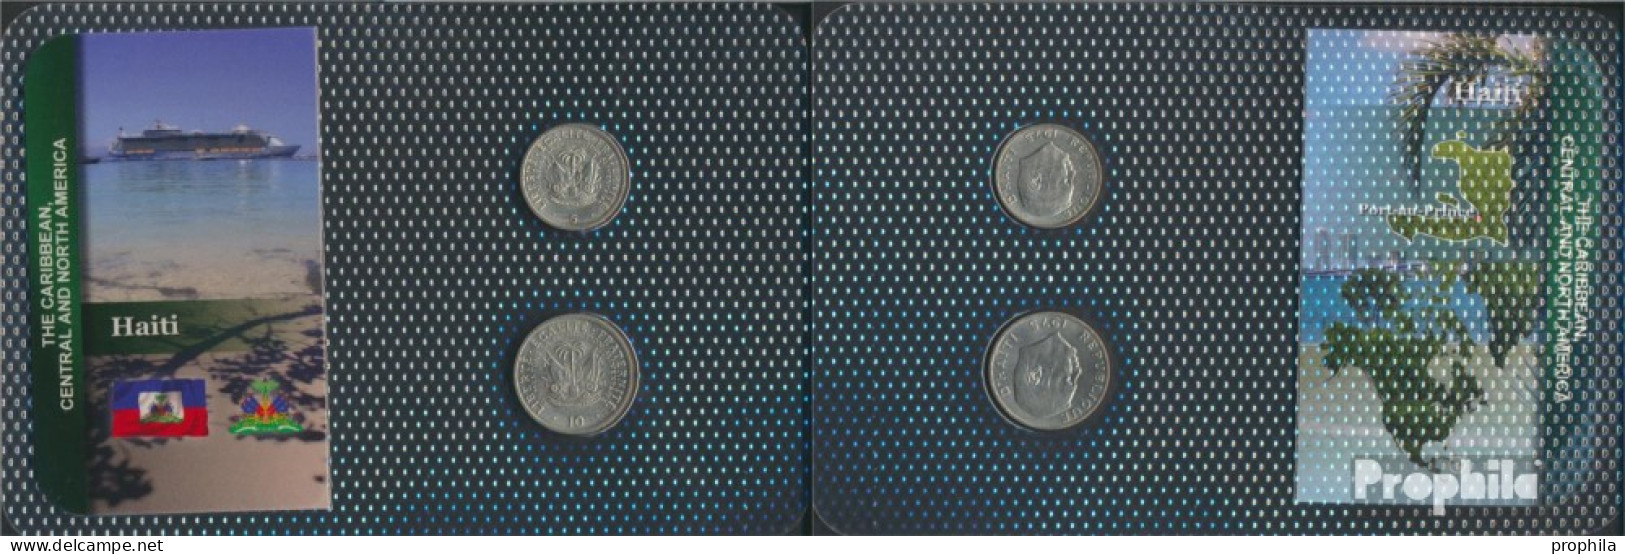 Haiti 1975 Stgl./unzirkuliert Kursmünzen Stgl./unzirkuliert 1975 5 Centimes Bis 10 Centimes - Haïti